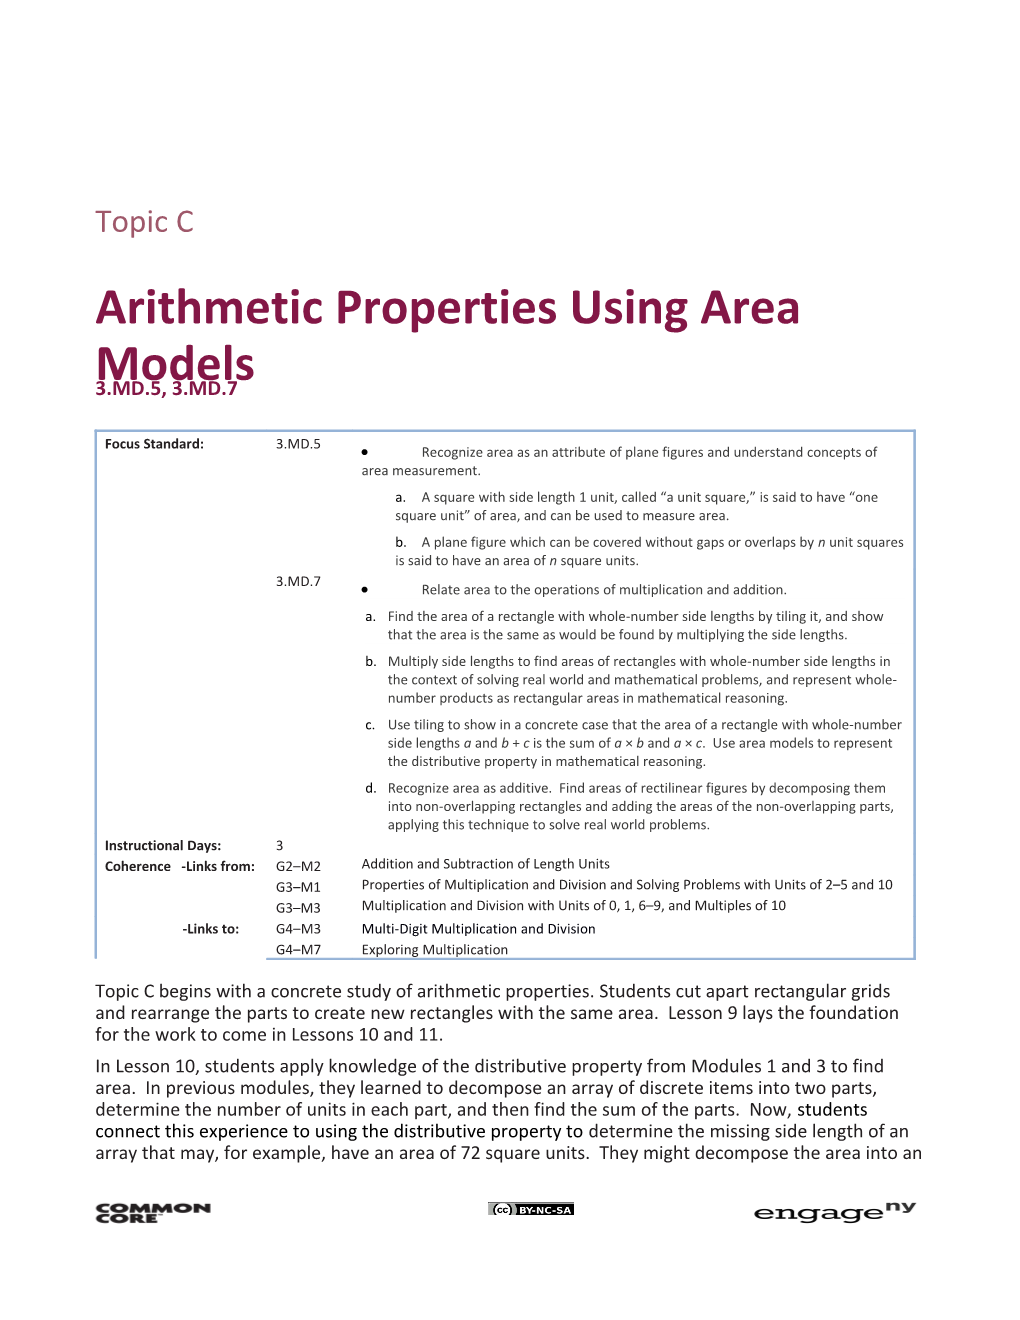 Arithmetic Properties Using Area Models